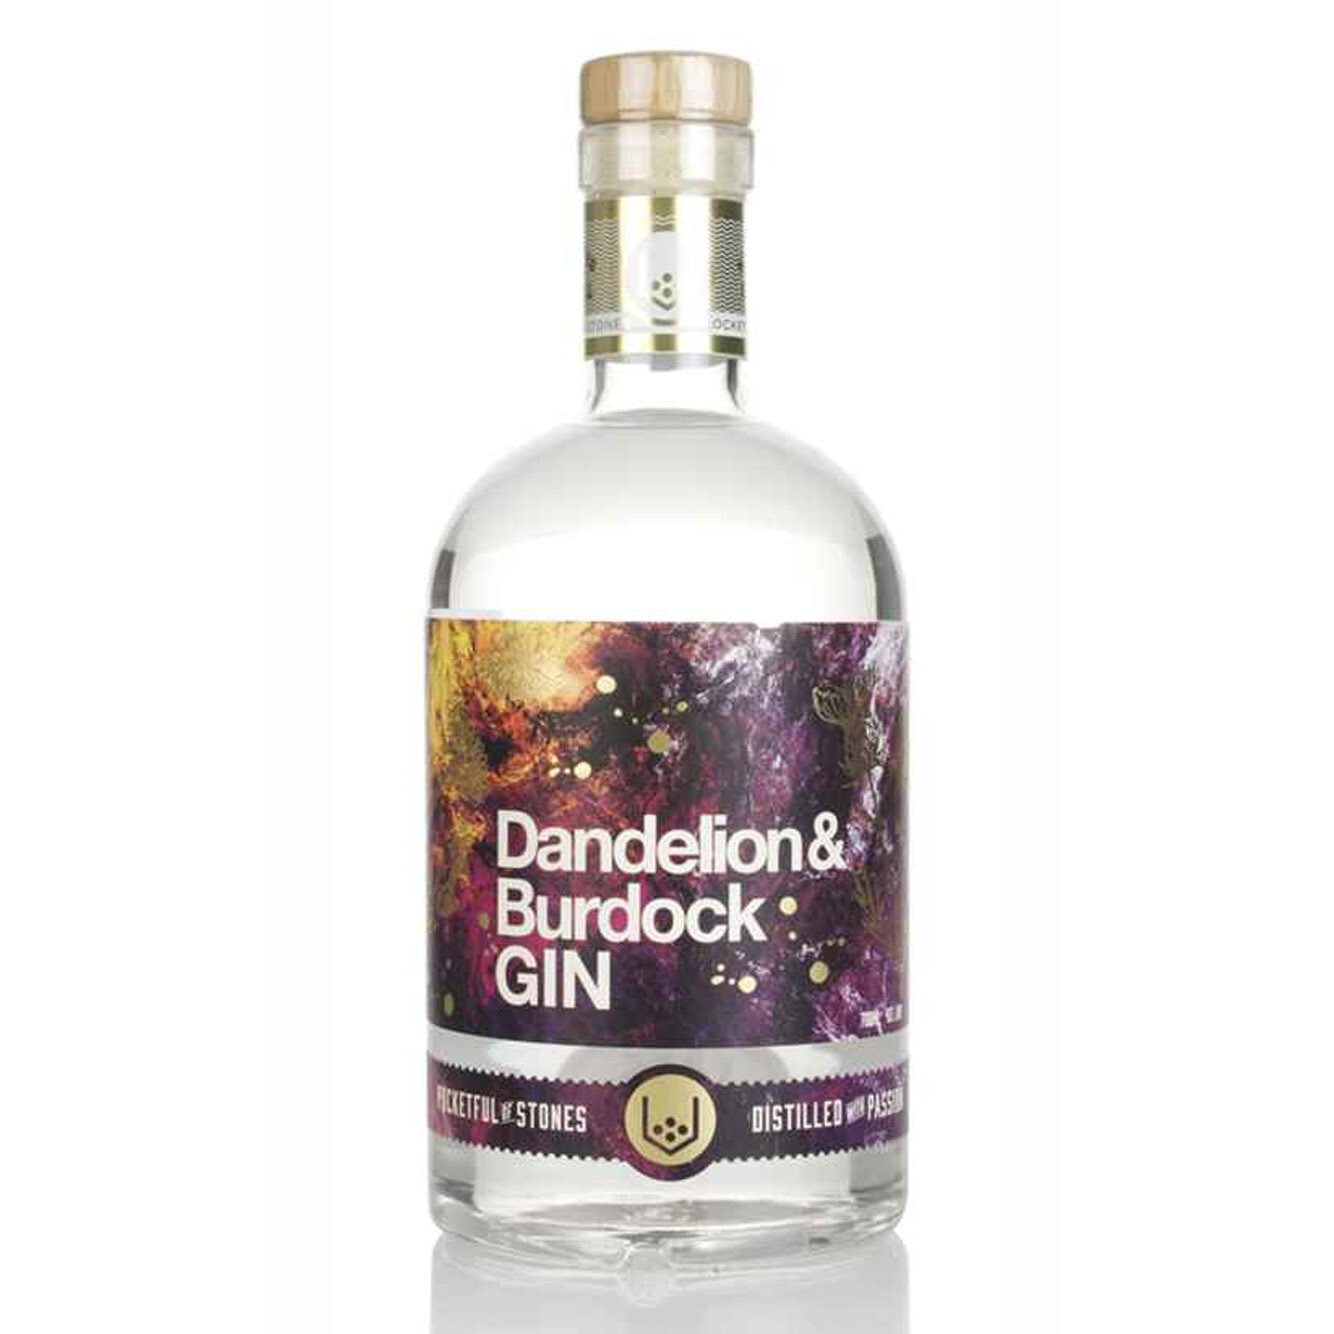 Pocketful of Stones Dandelion & Burdock Gin LARGE